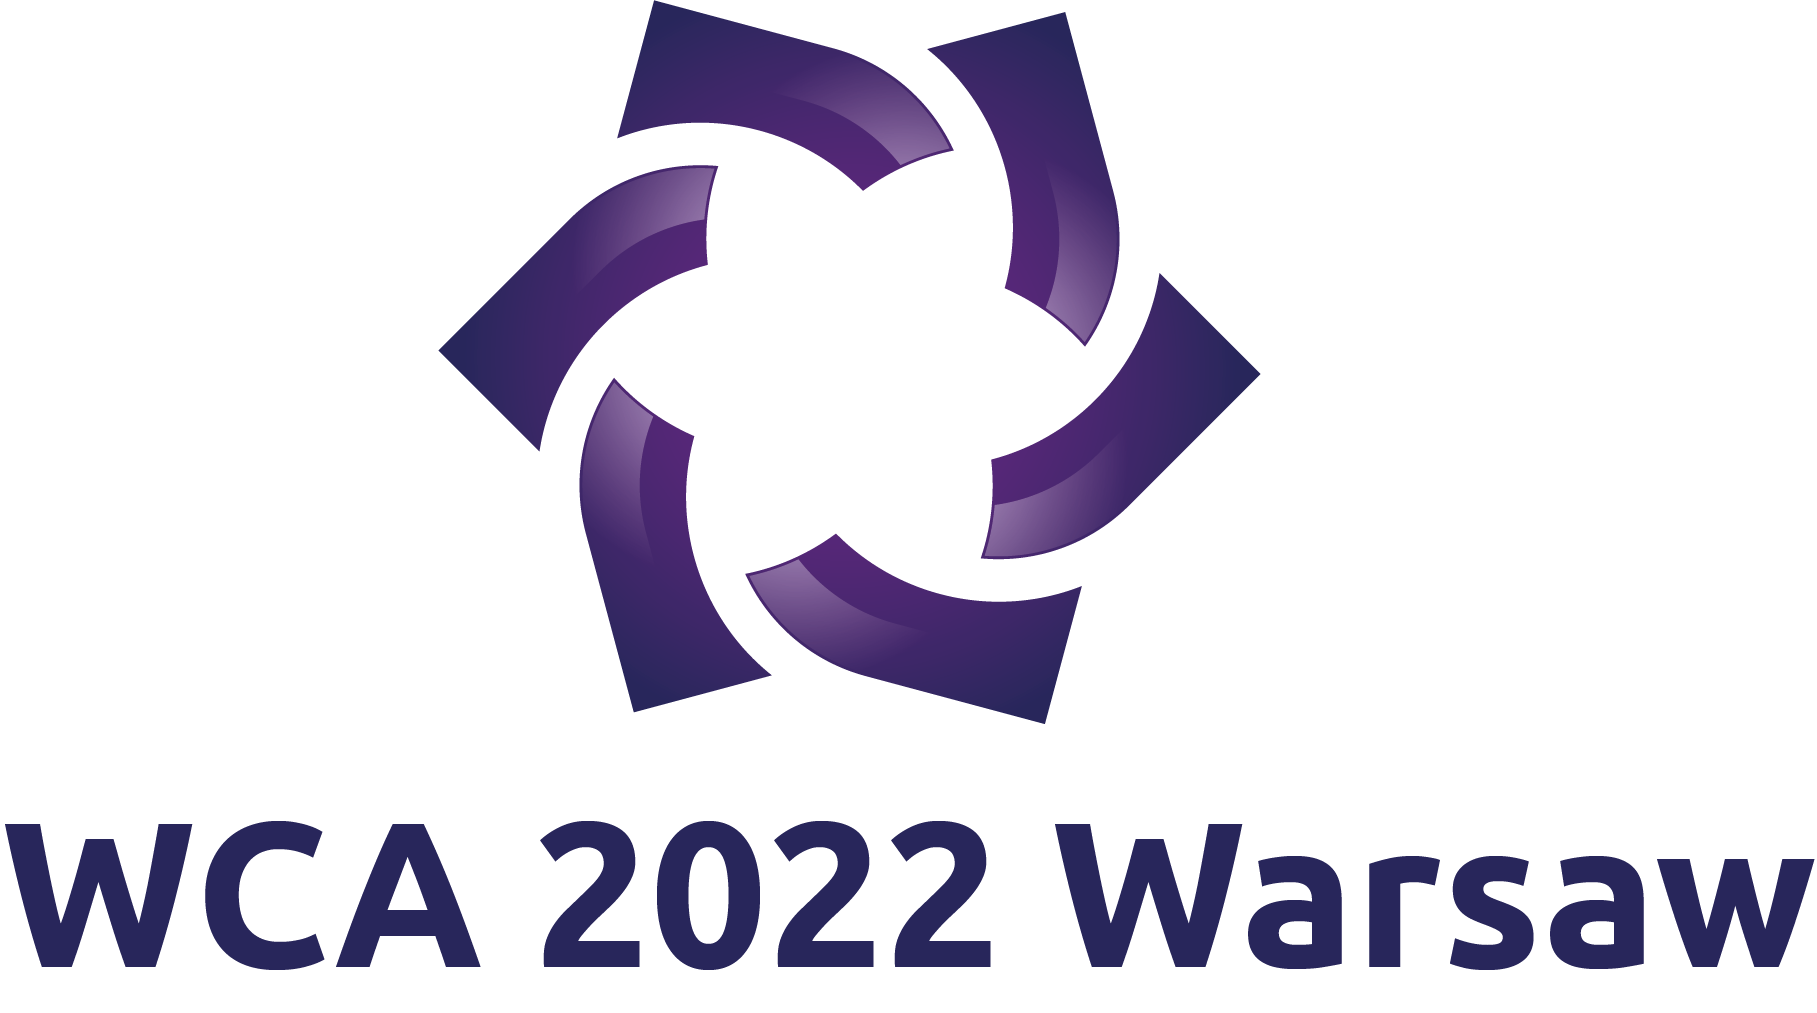 WCA 2022 Warsaw